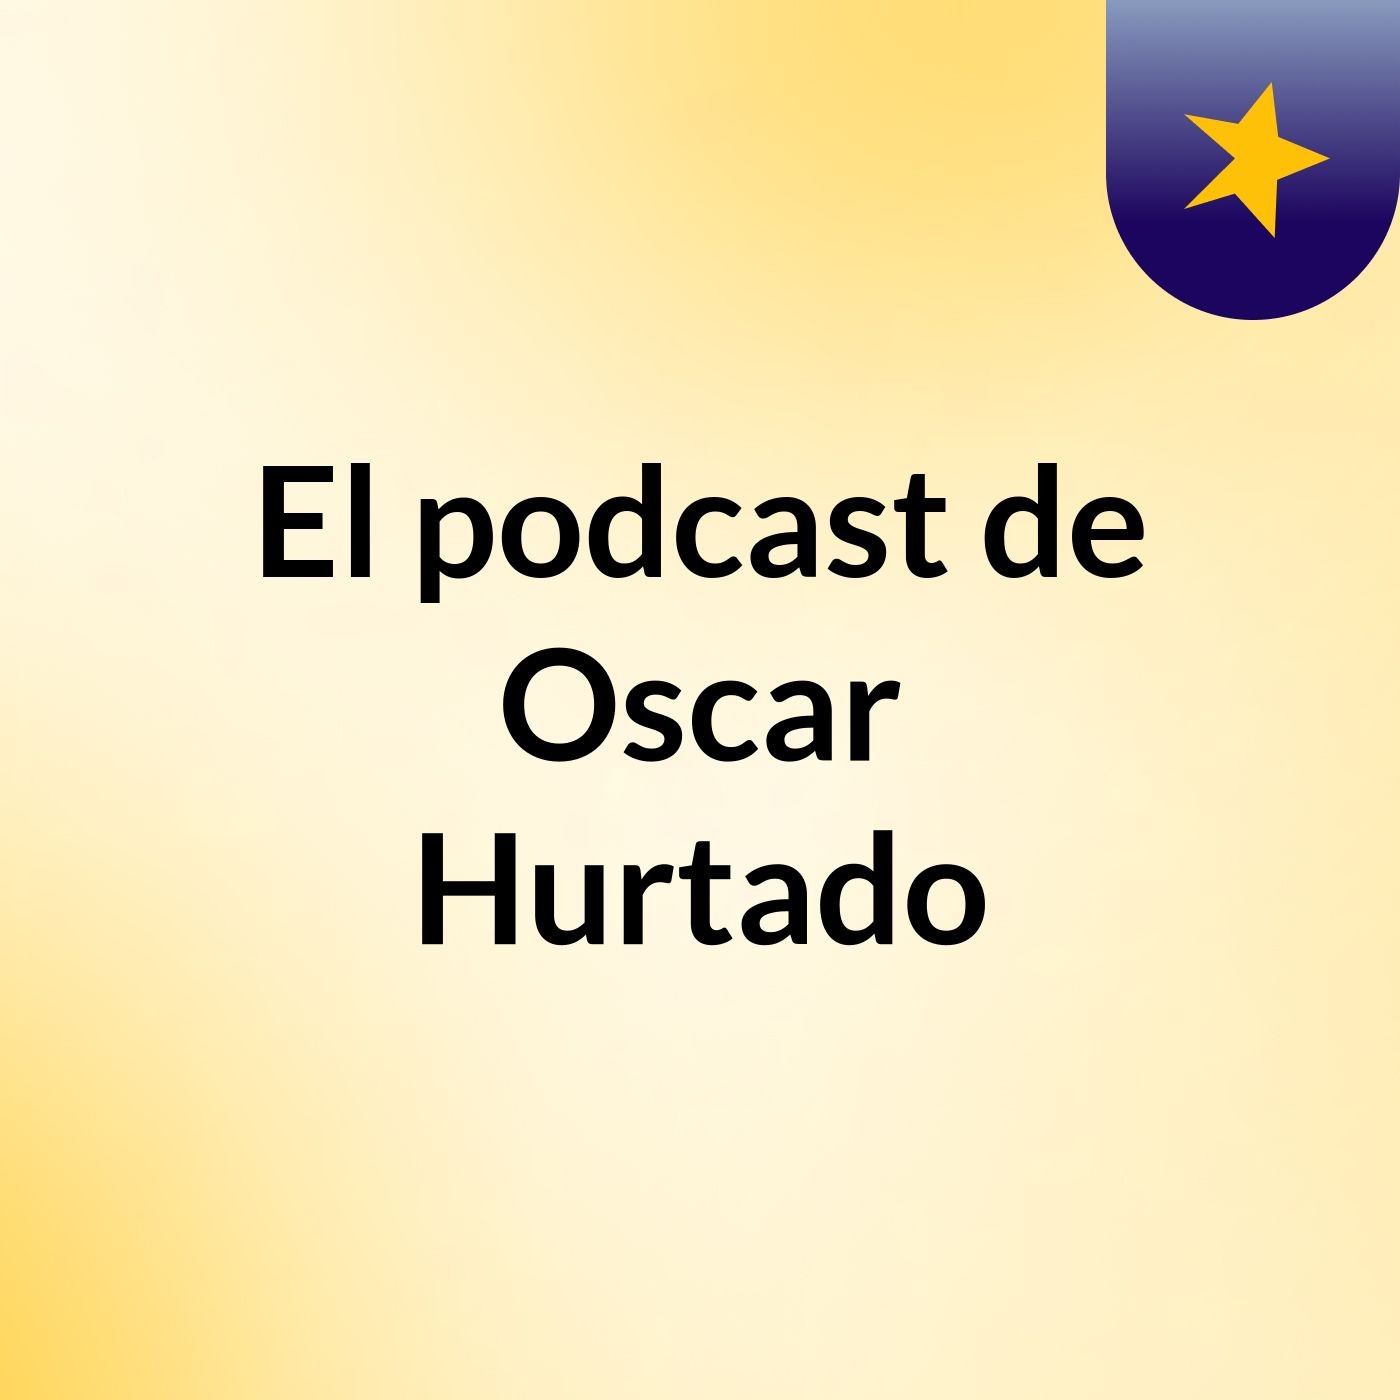 El podcast de Oscar Hurtado